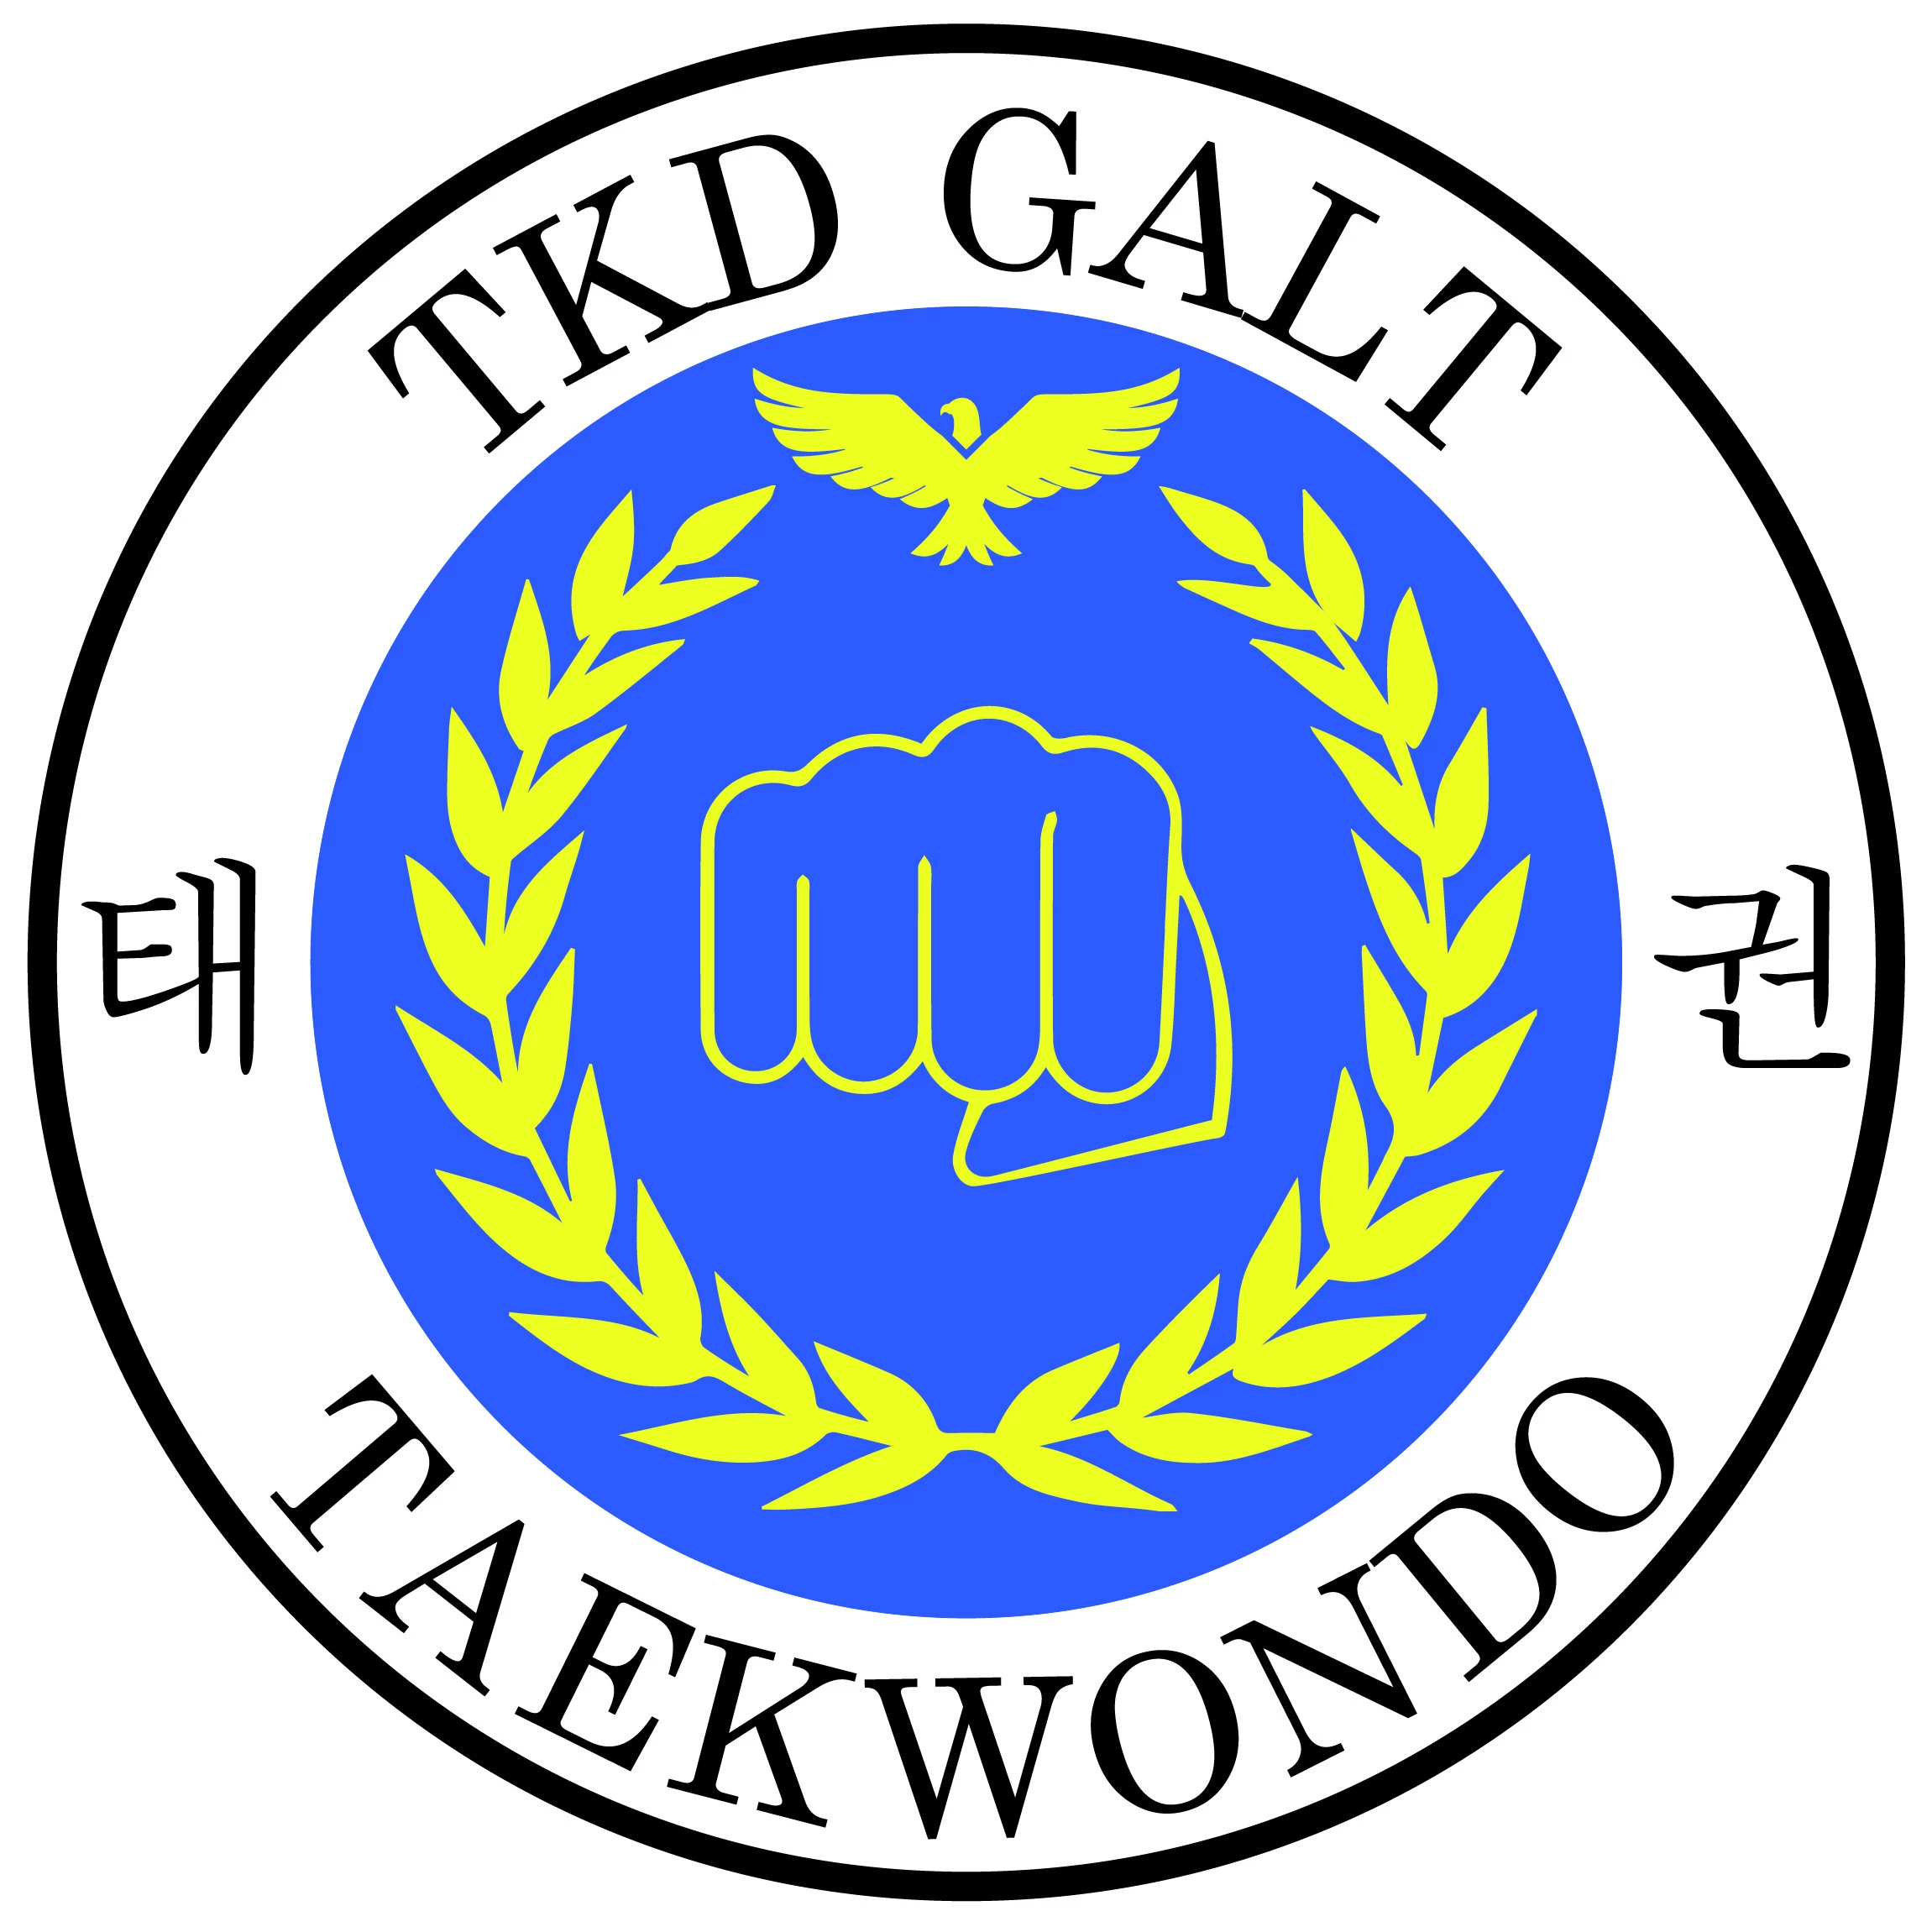 TKD Galt Tae Kwon Do Cambridge